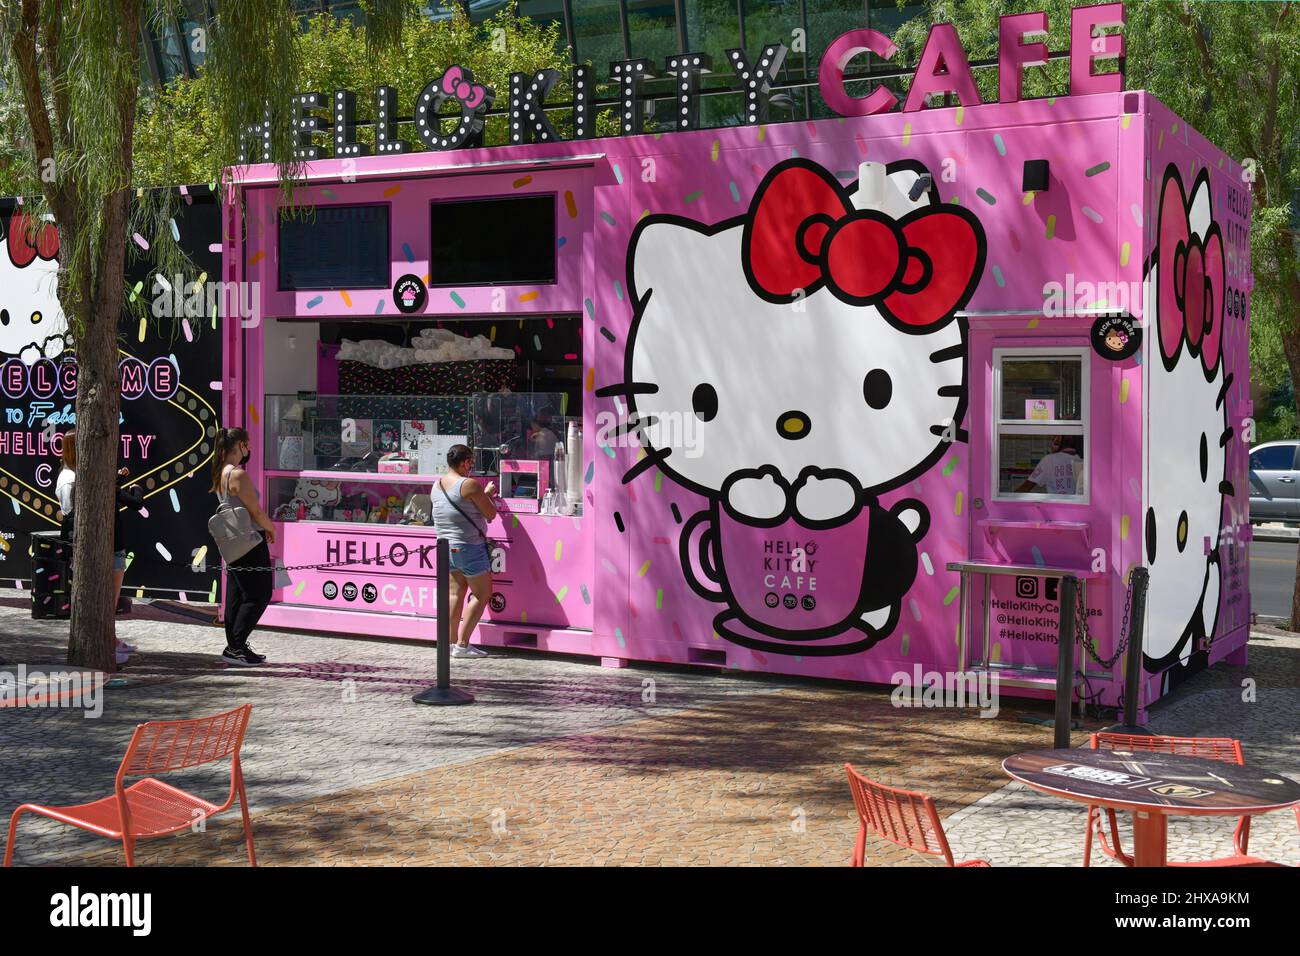 Hello Kitty Cafe Las Vegas, Gallery posted by Kiara Coats